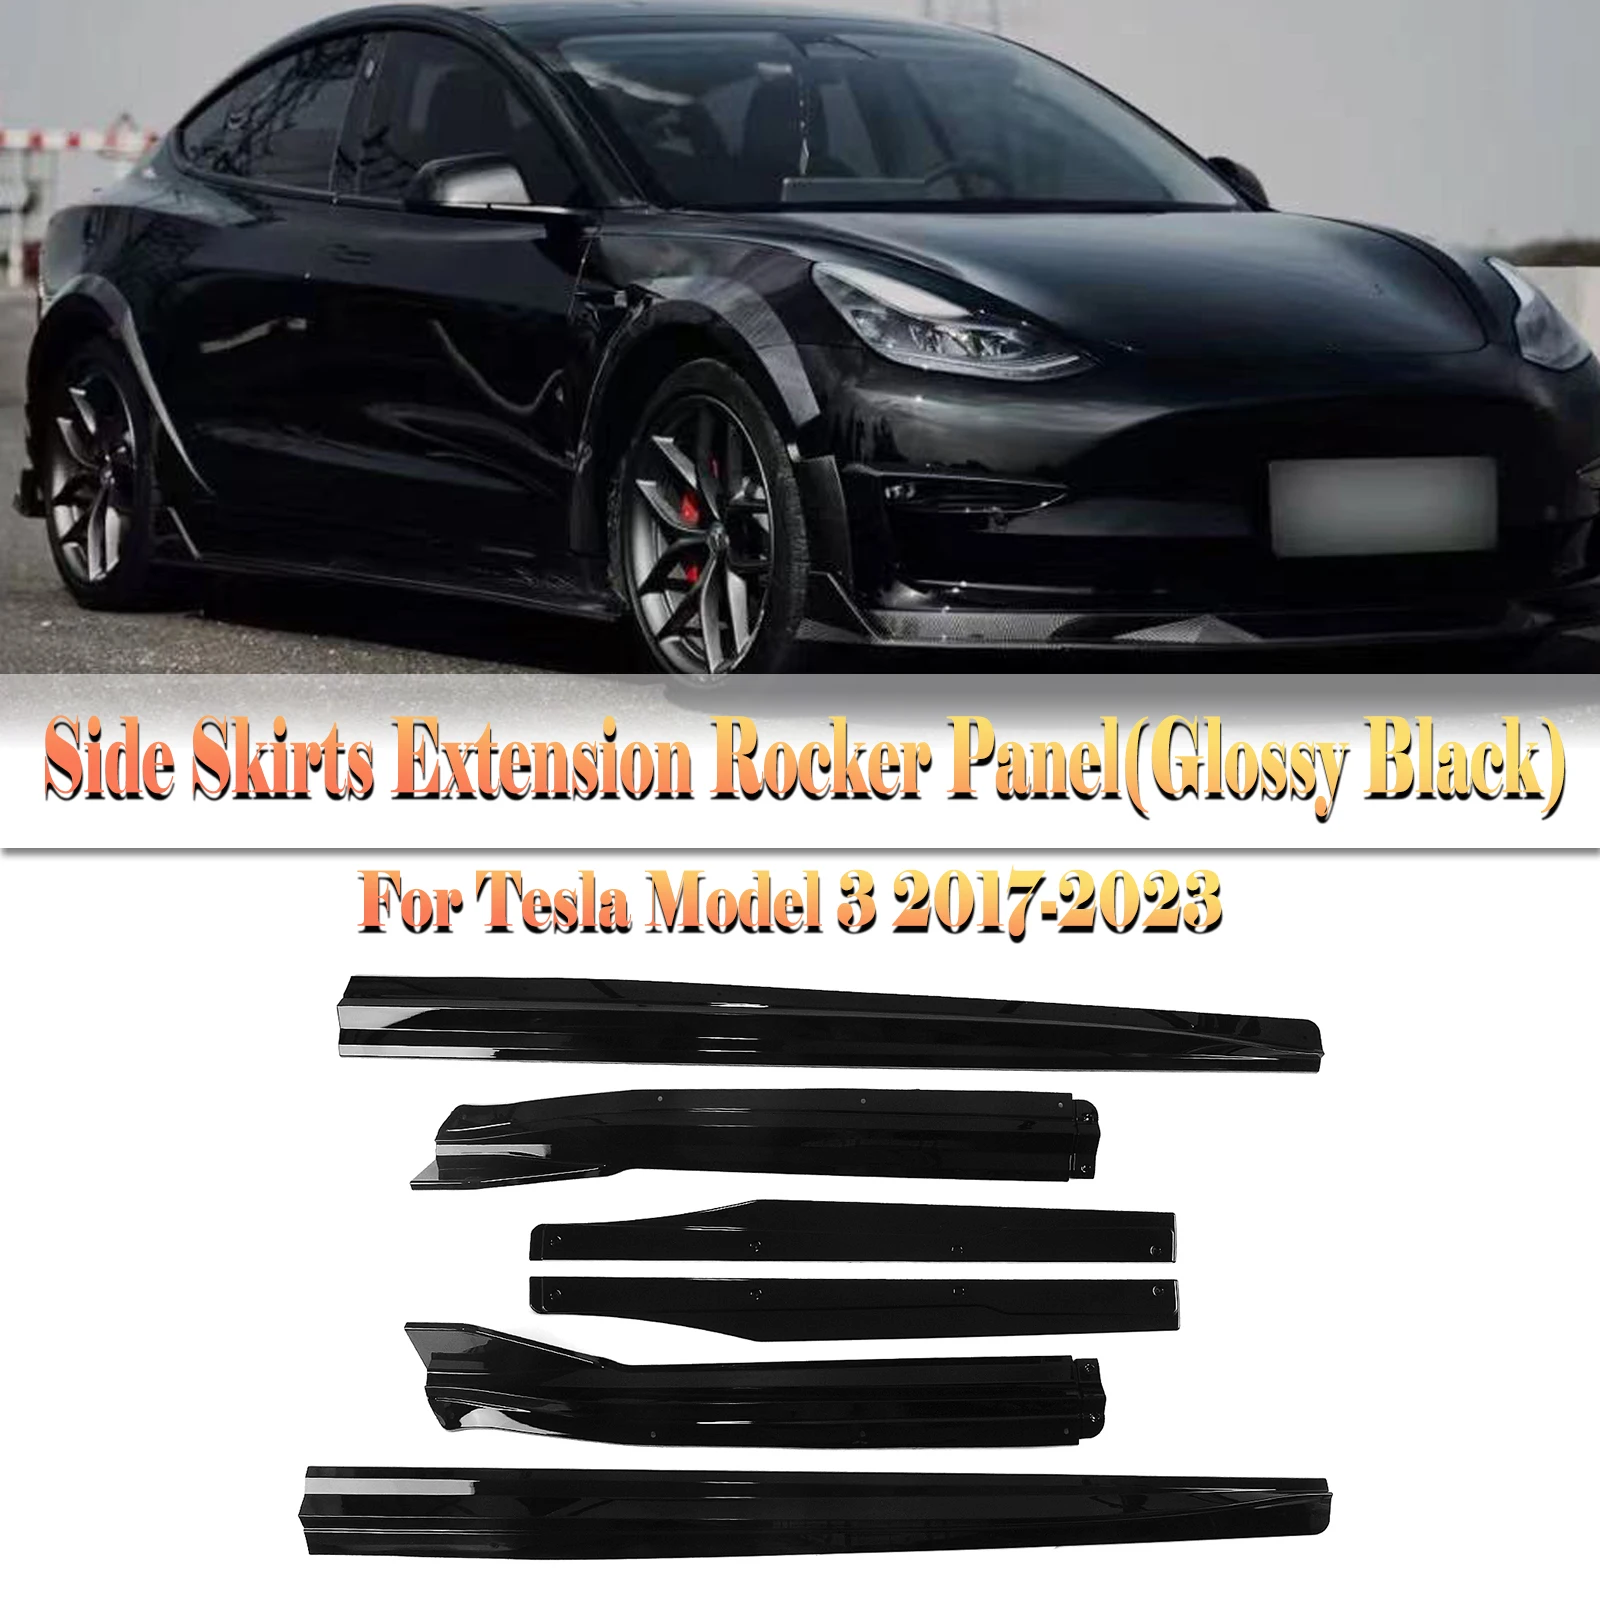 

Car Exterior Side Skirts Extension Rocker Panel Kit For Tesla Model 3 2017-2023 Carbon Fiber Look/Gloss Black